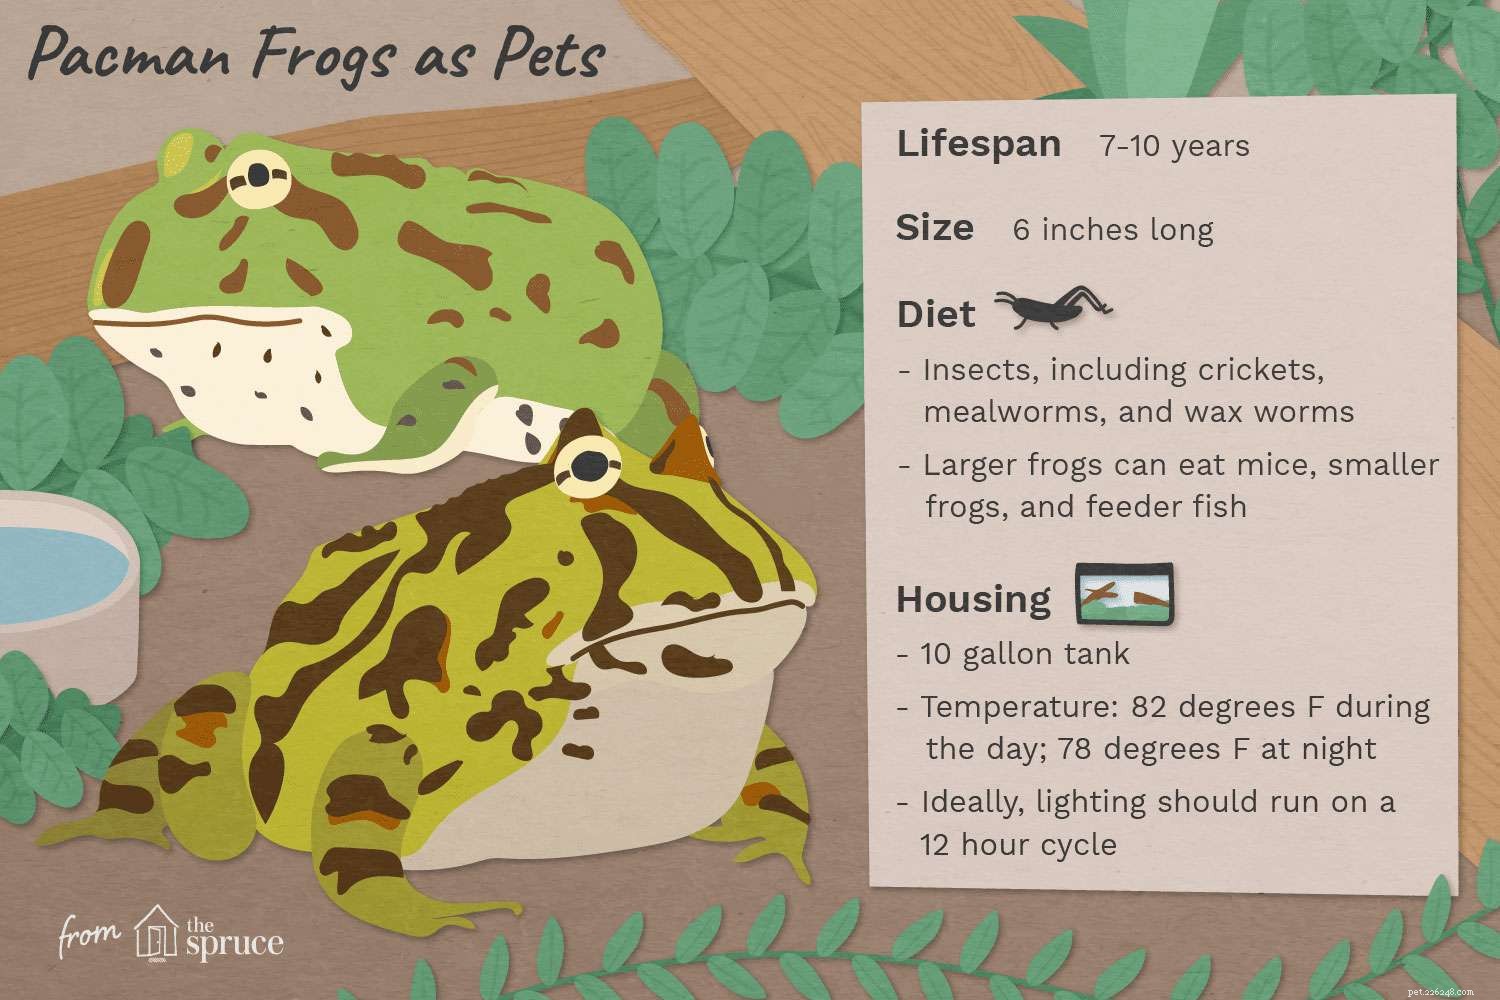 Pacman Frogs：Species Profile